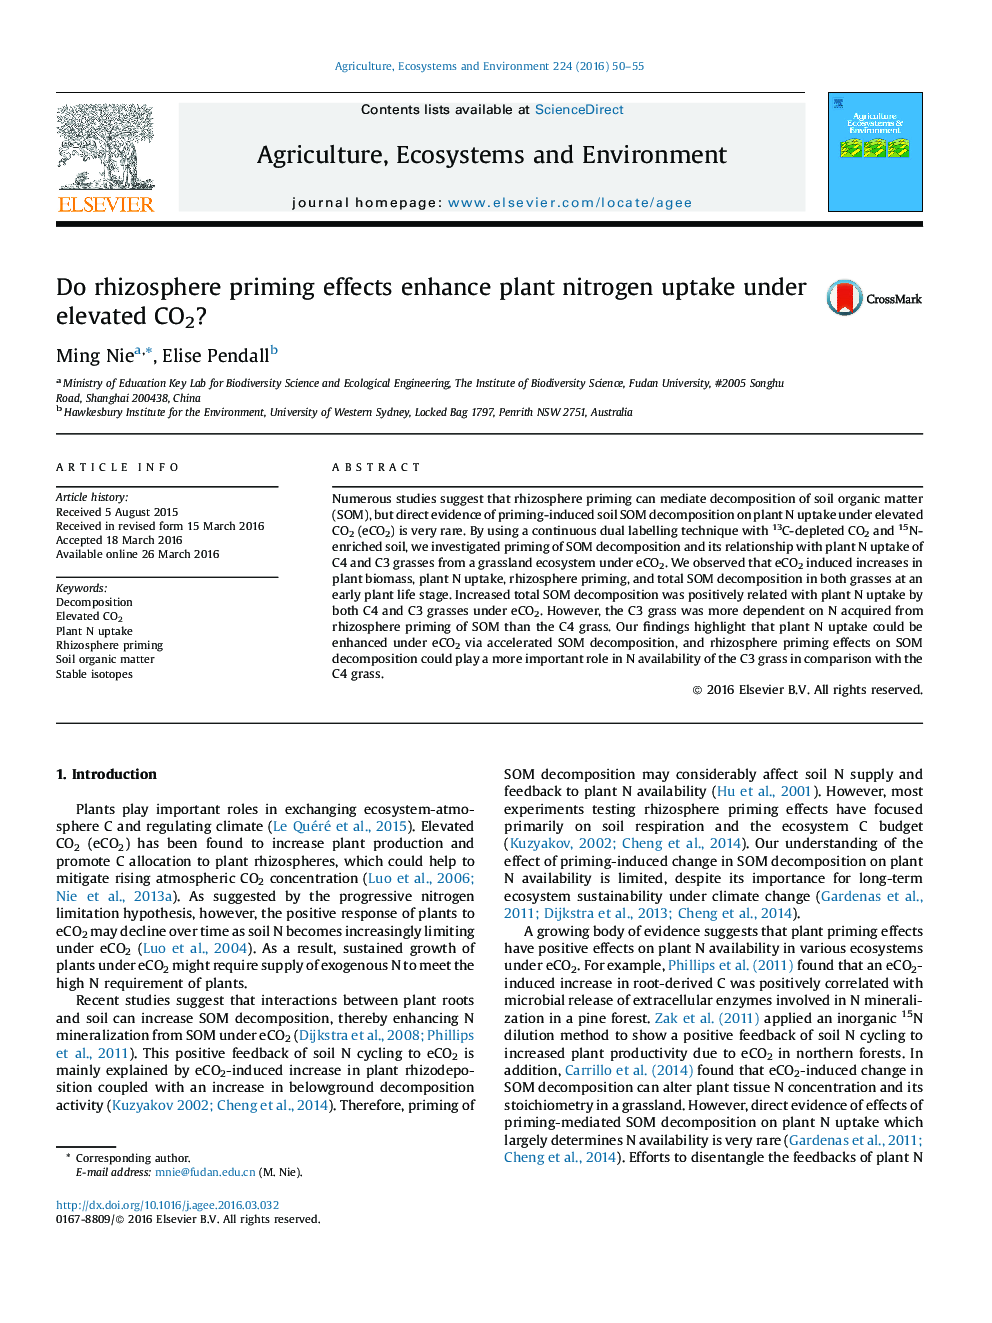 Do rhizosphere priming effects enhance plant nitrogen uptake under elevated CO2?